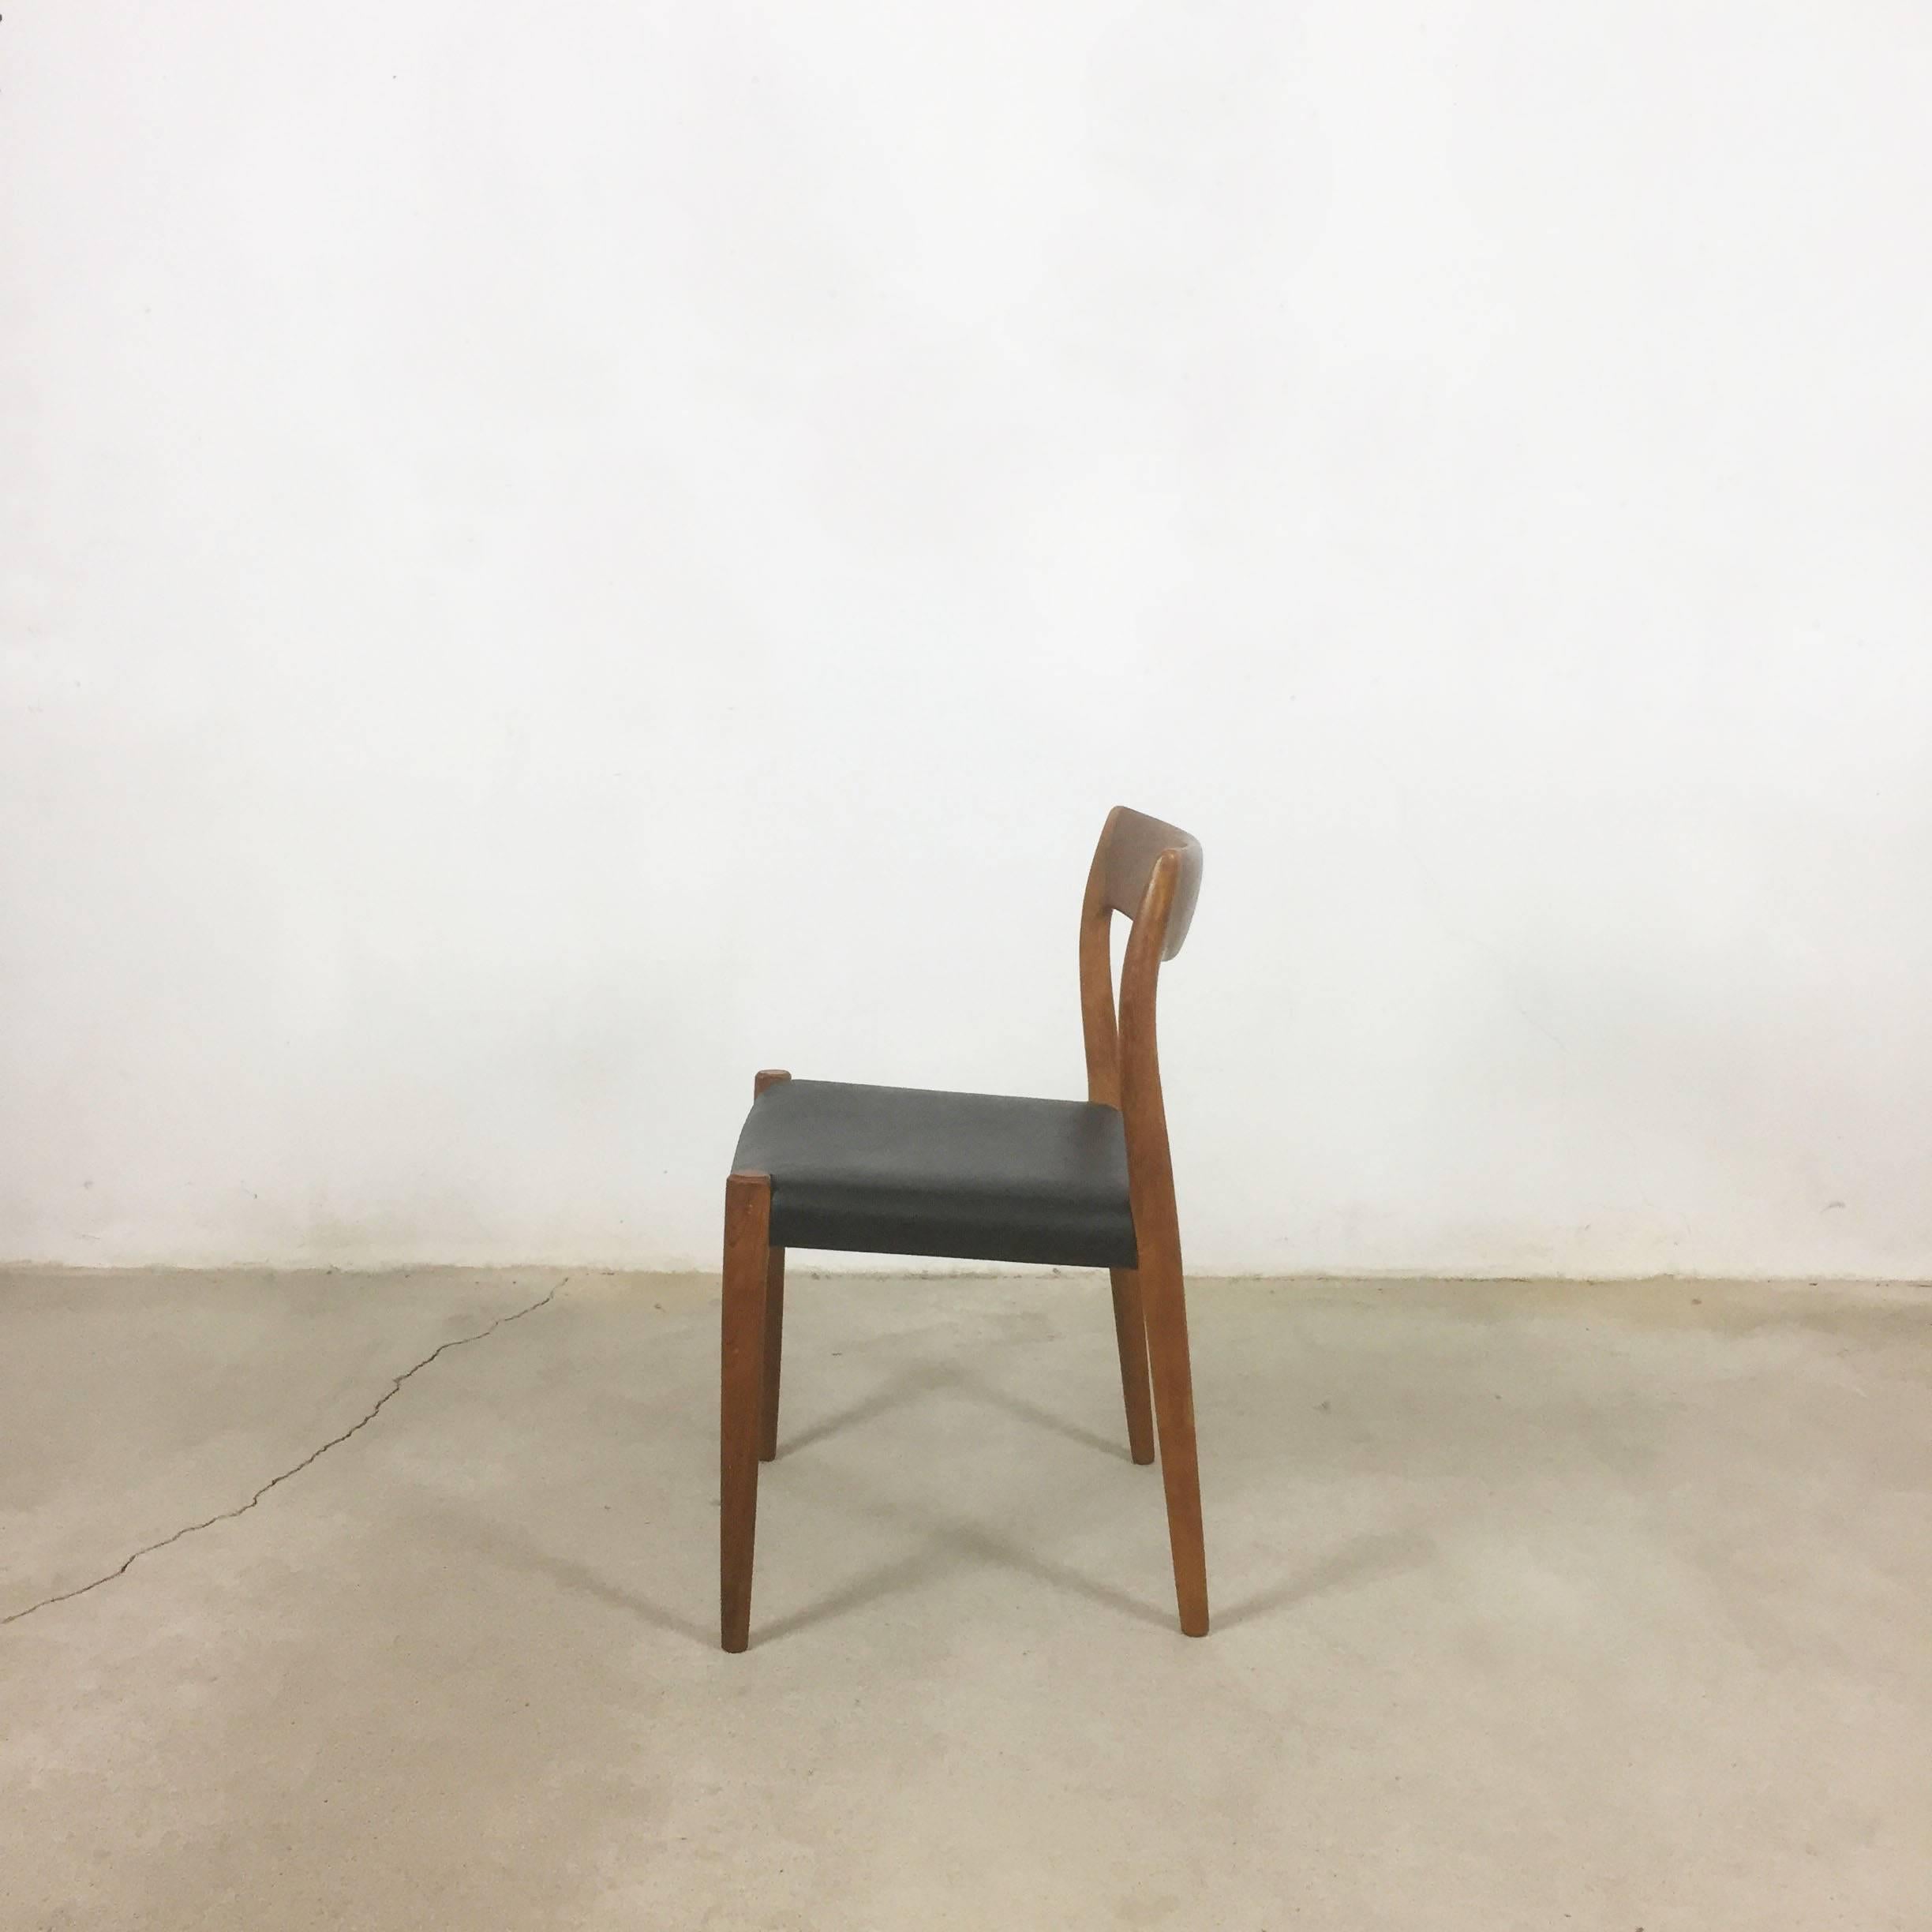 20th Century Teak Chair No. 77, Set of Four, Niels Moller for Moller Models Denmark, 1960s